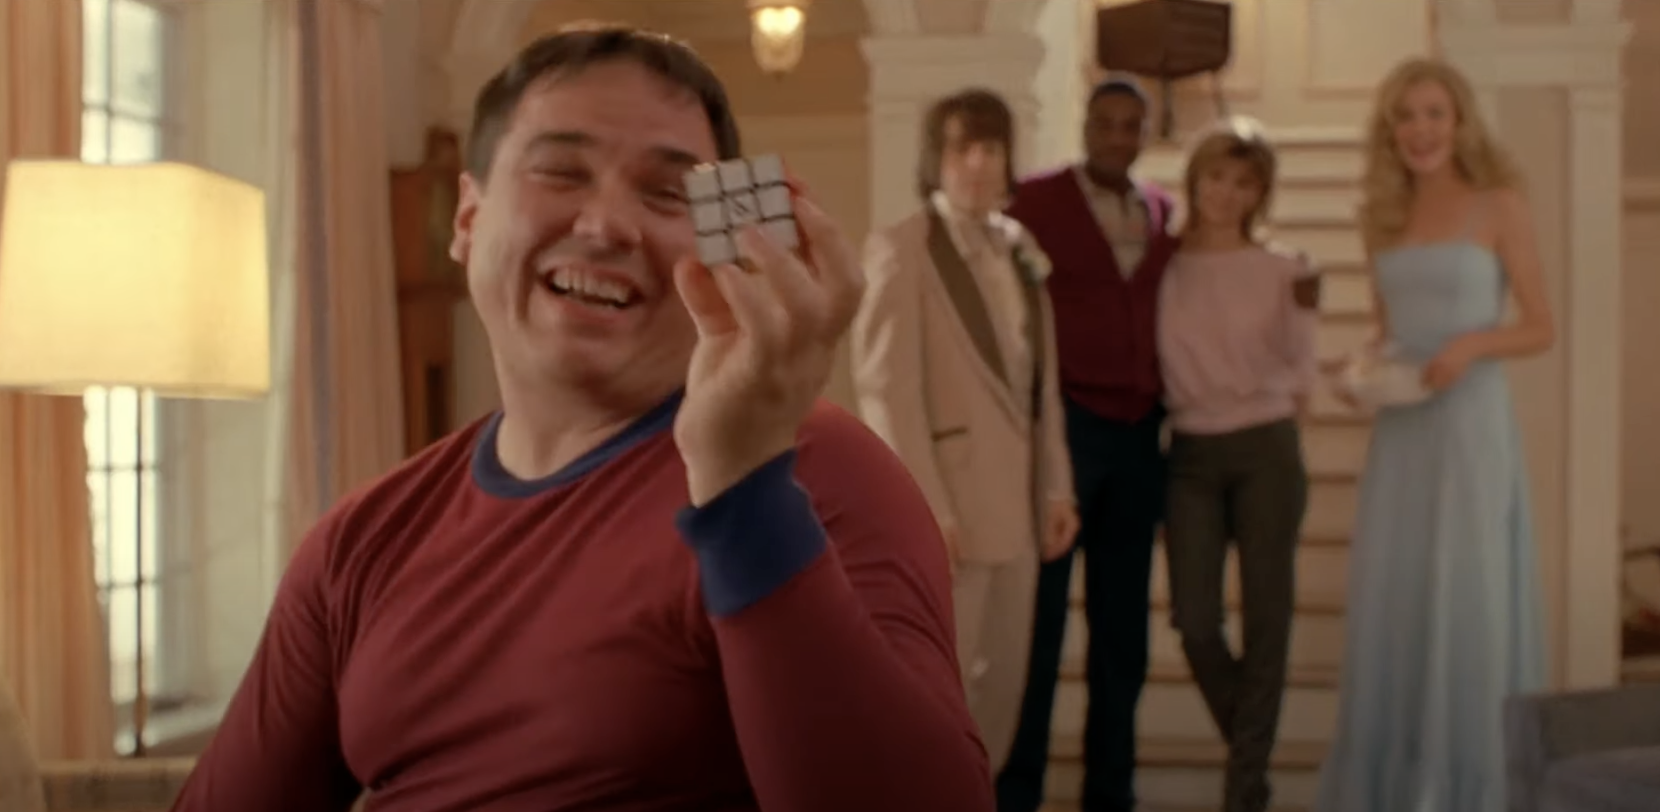 Warren holds a solved Rubix cube